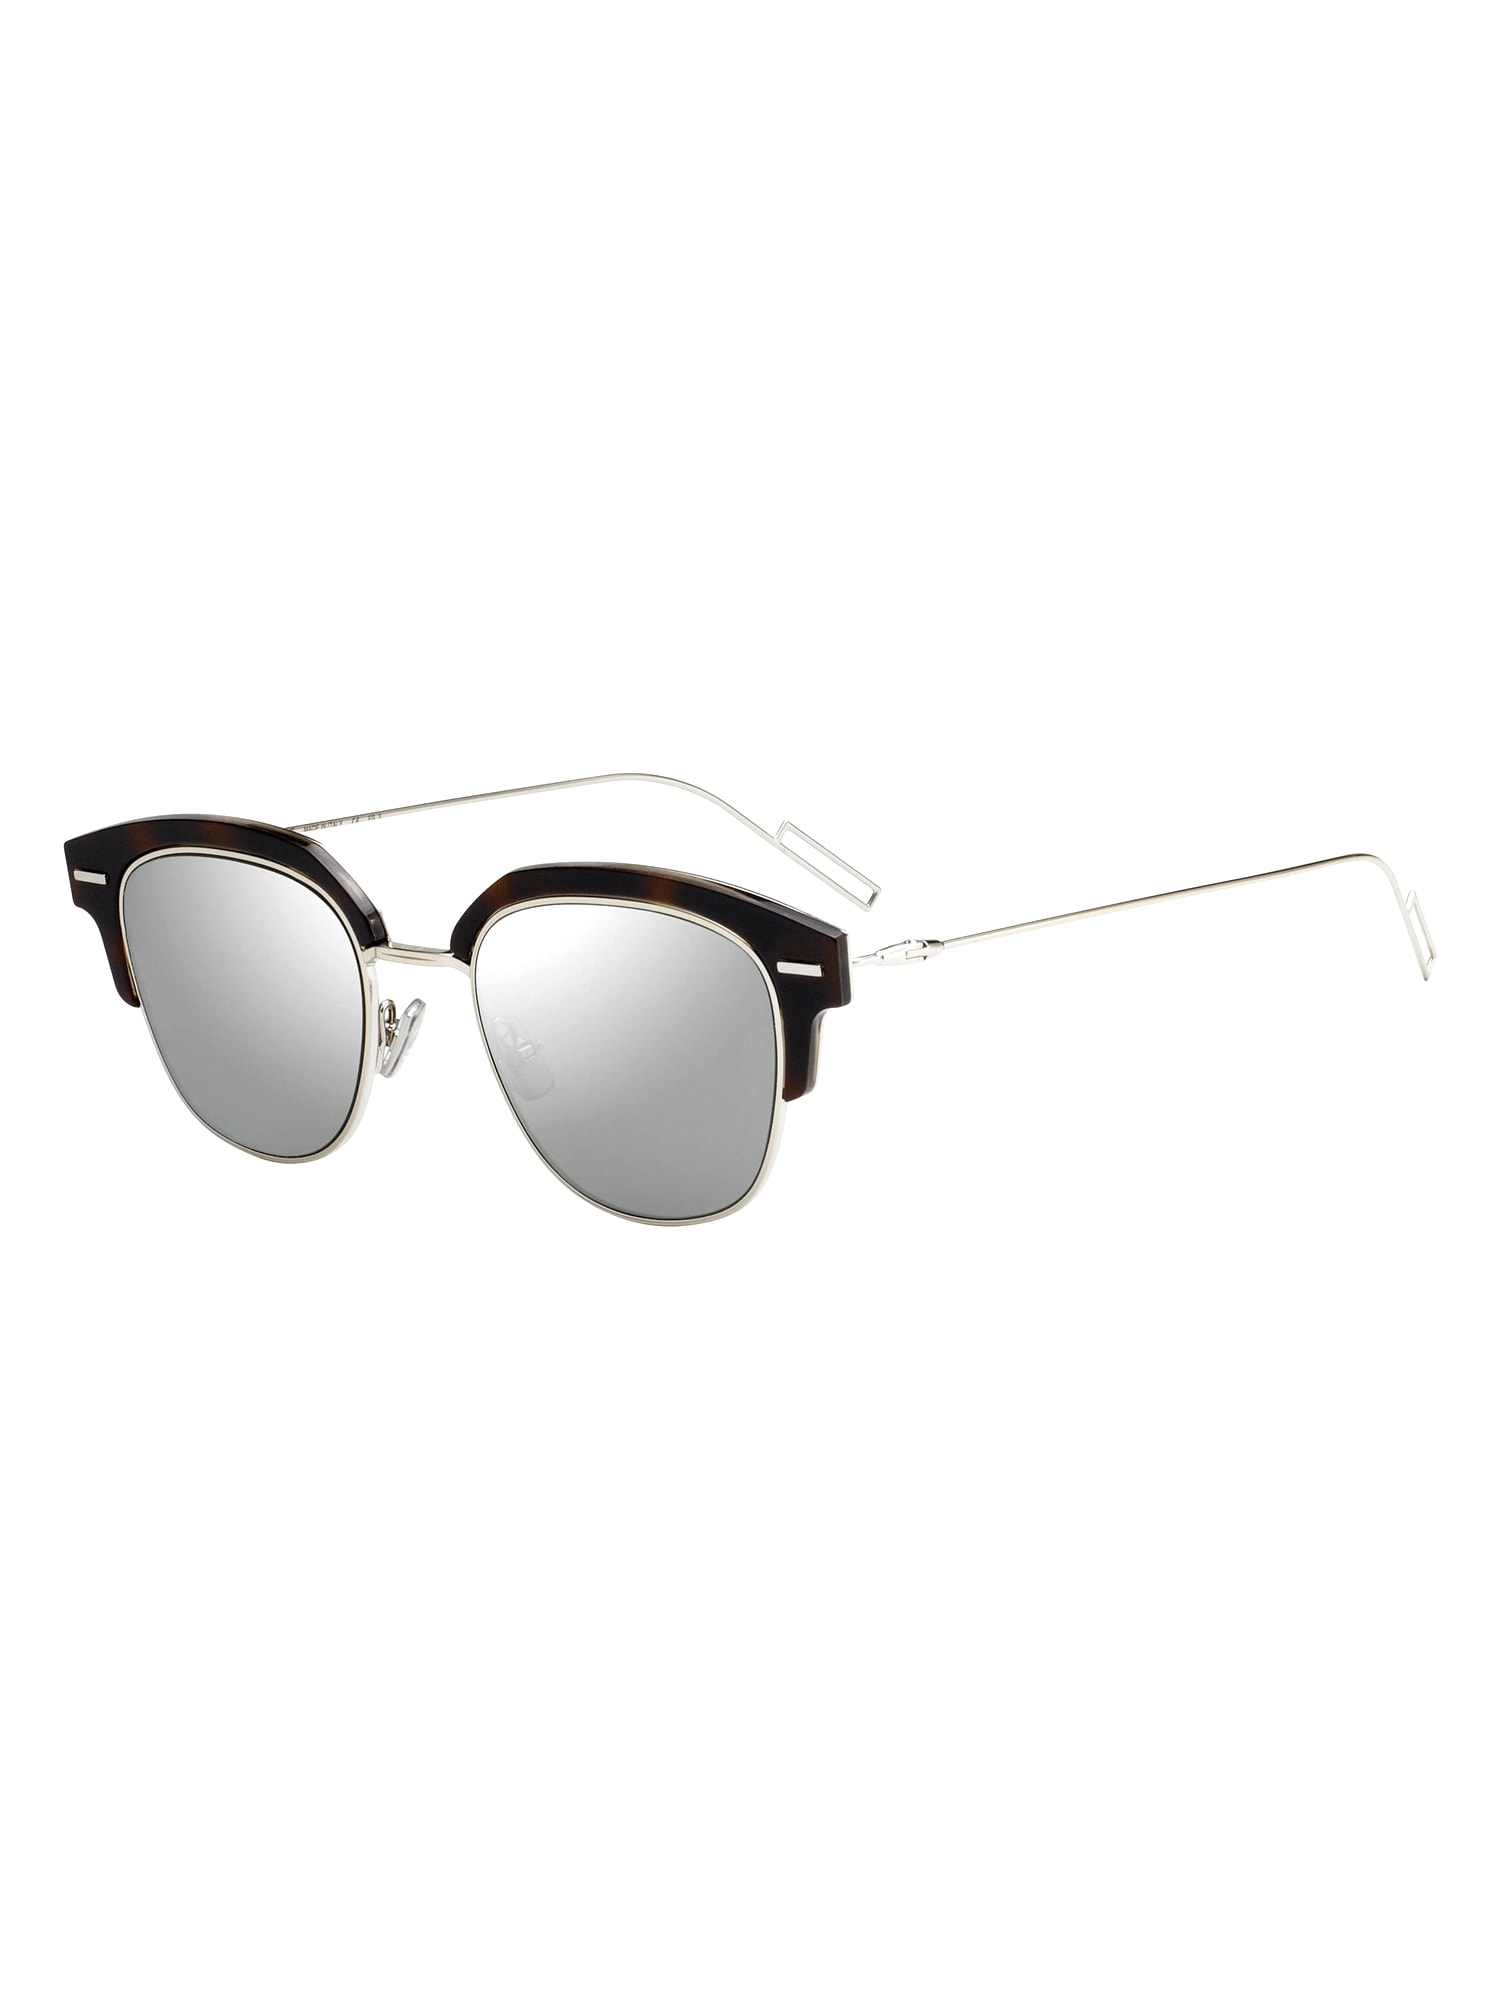 Christian Dior DIORTENSITY Sunglasses